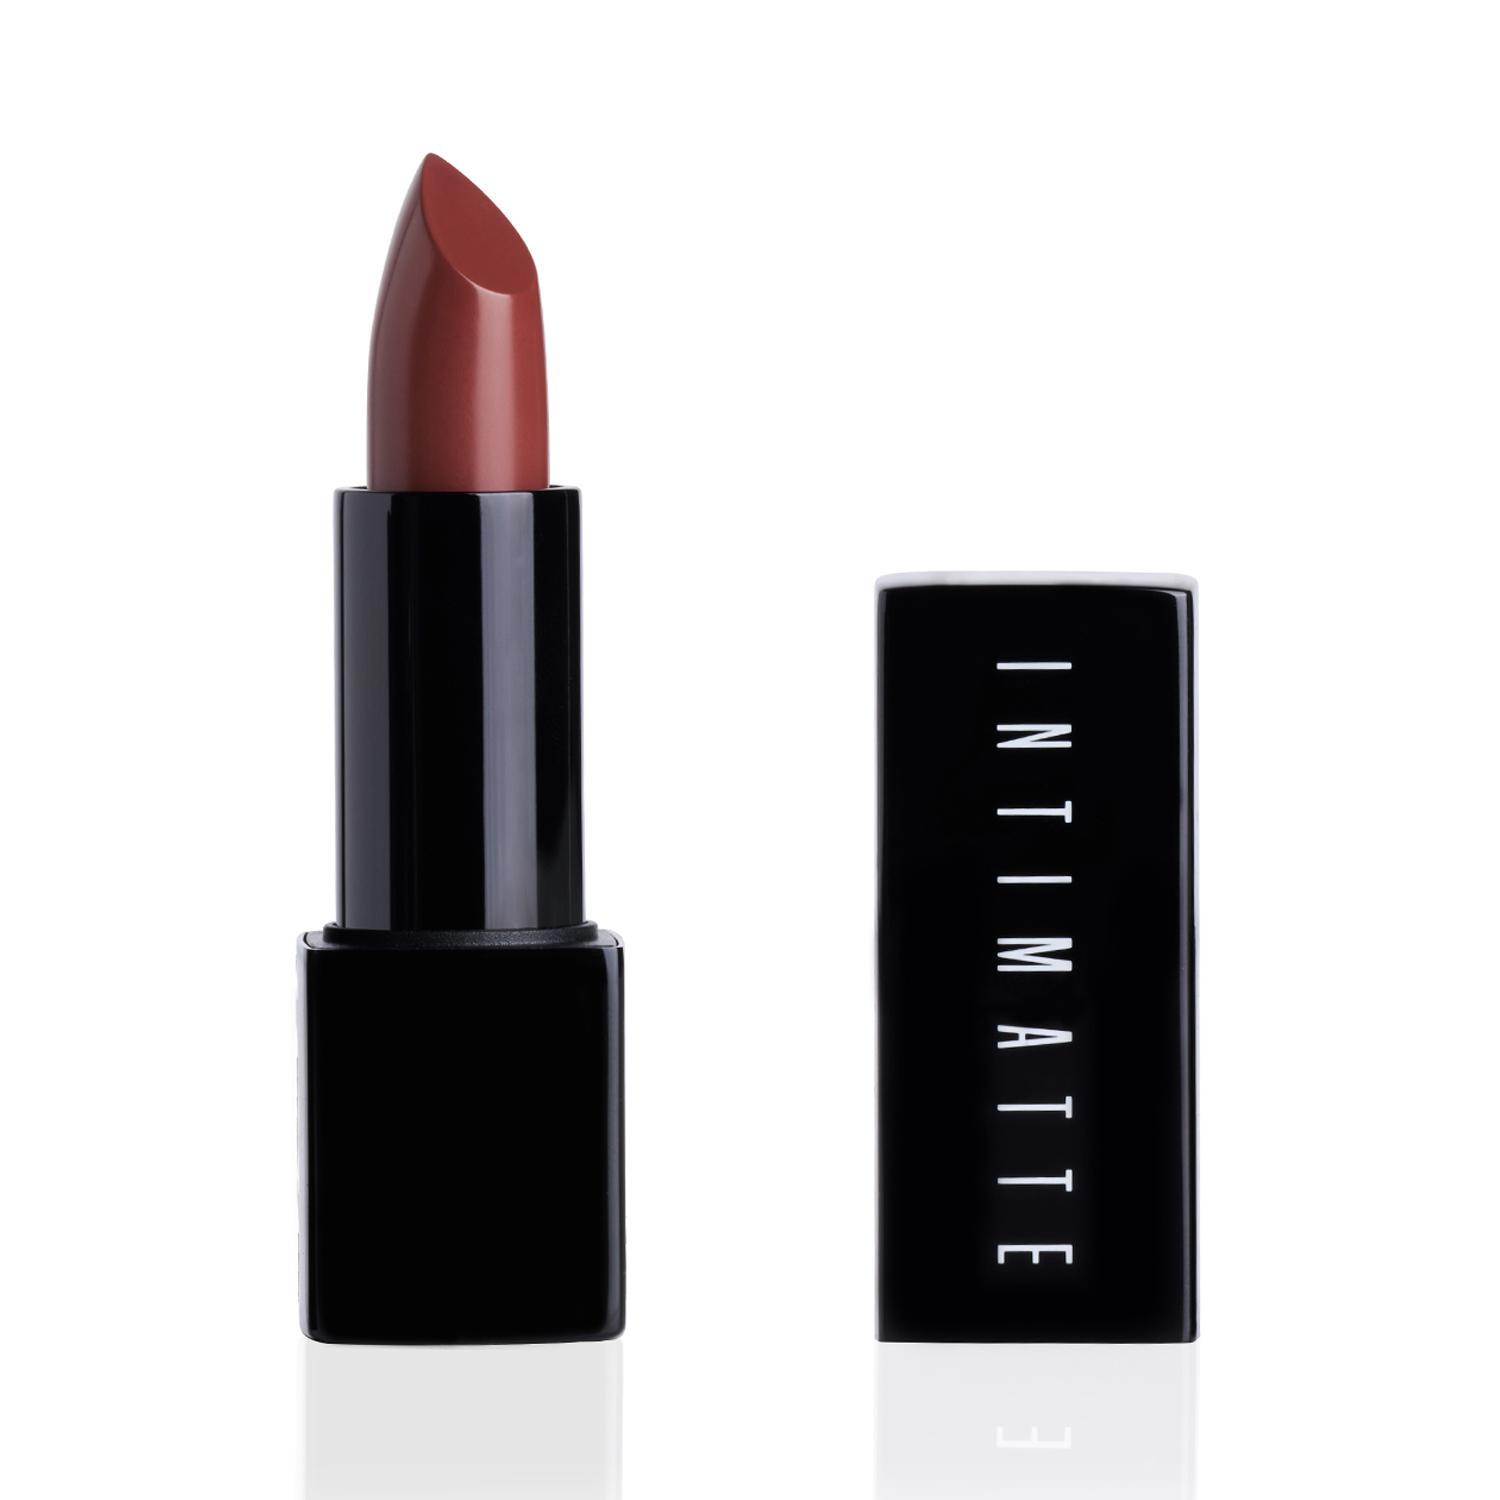 PAC | PAC Intimatte Lipstick - The Brick Era (4g)